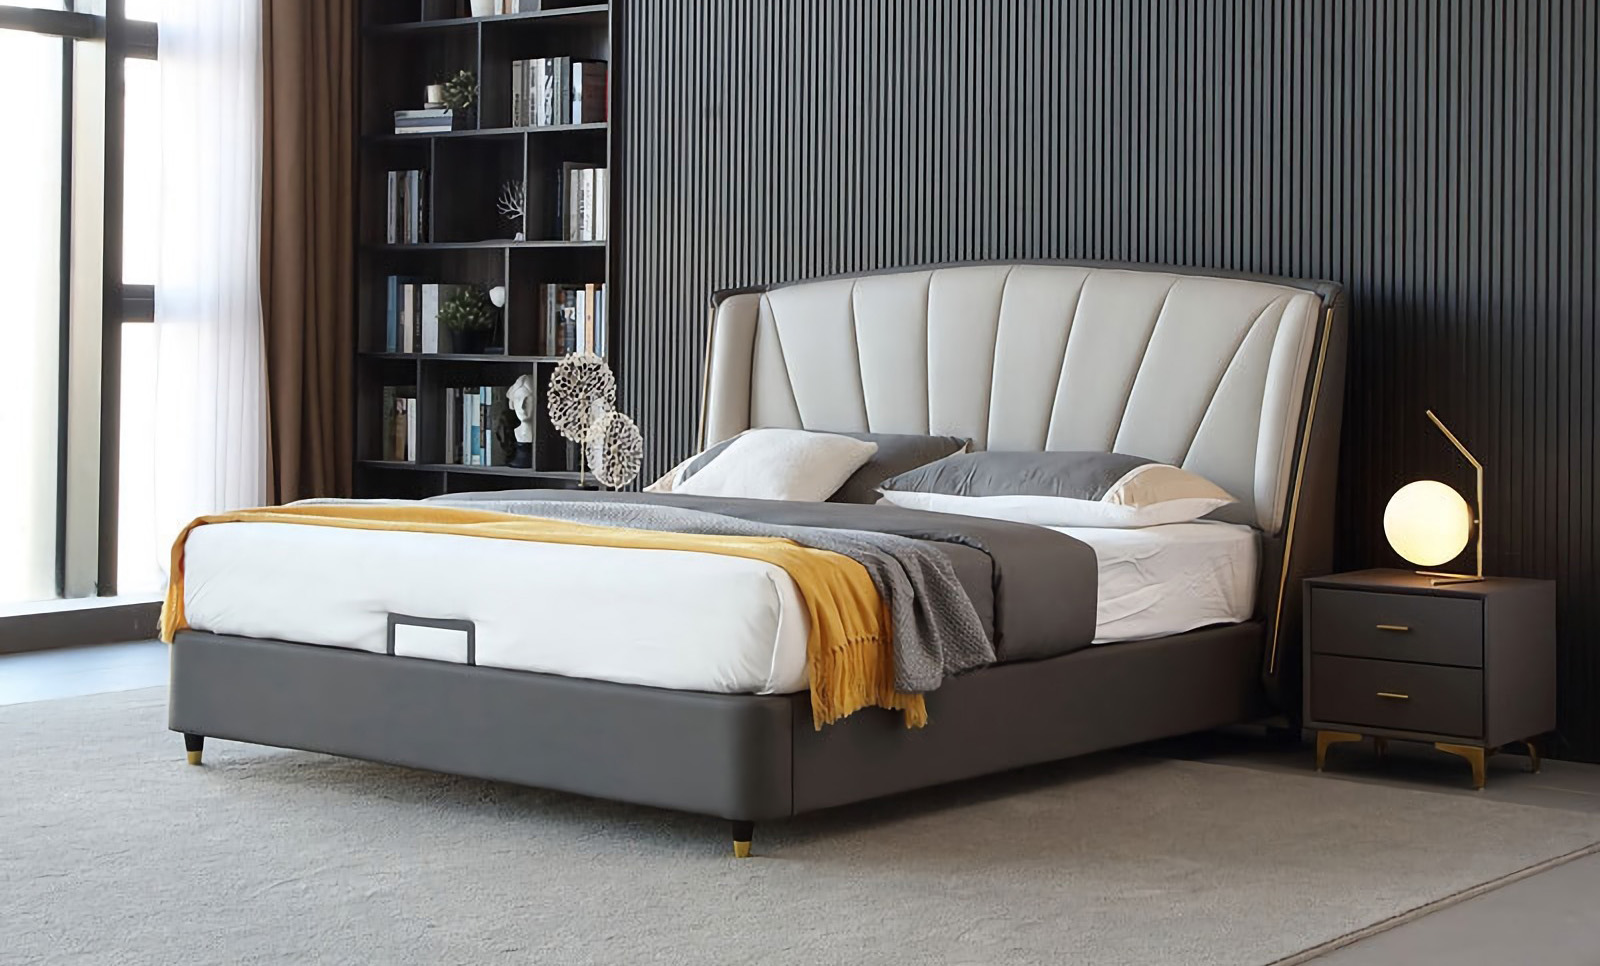 Modern minimalistisk sängdesignfunktioner hos modern minimalistisk säng.